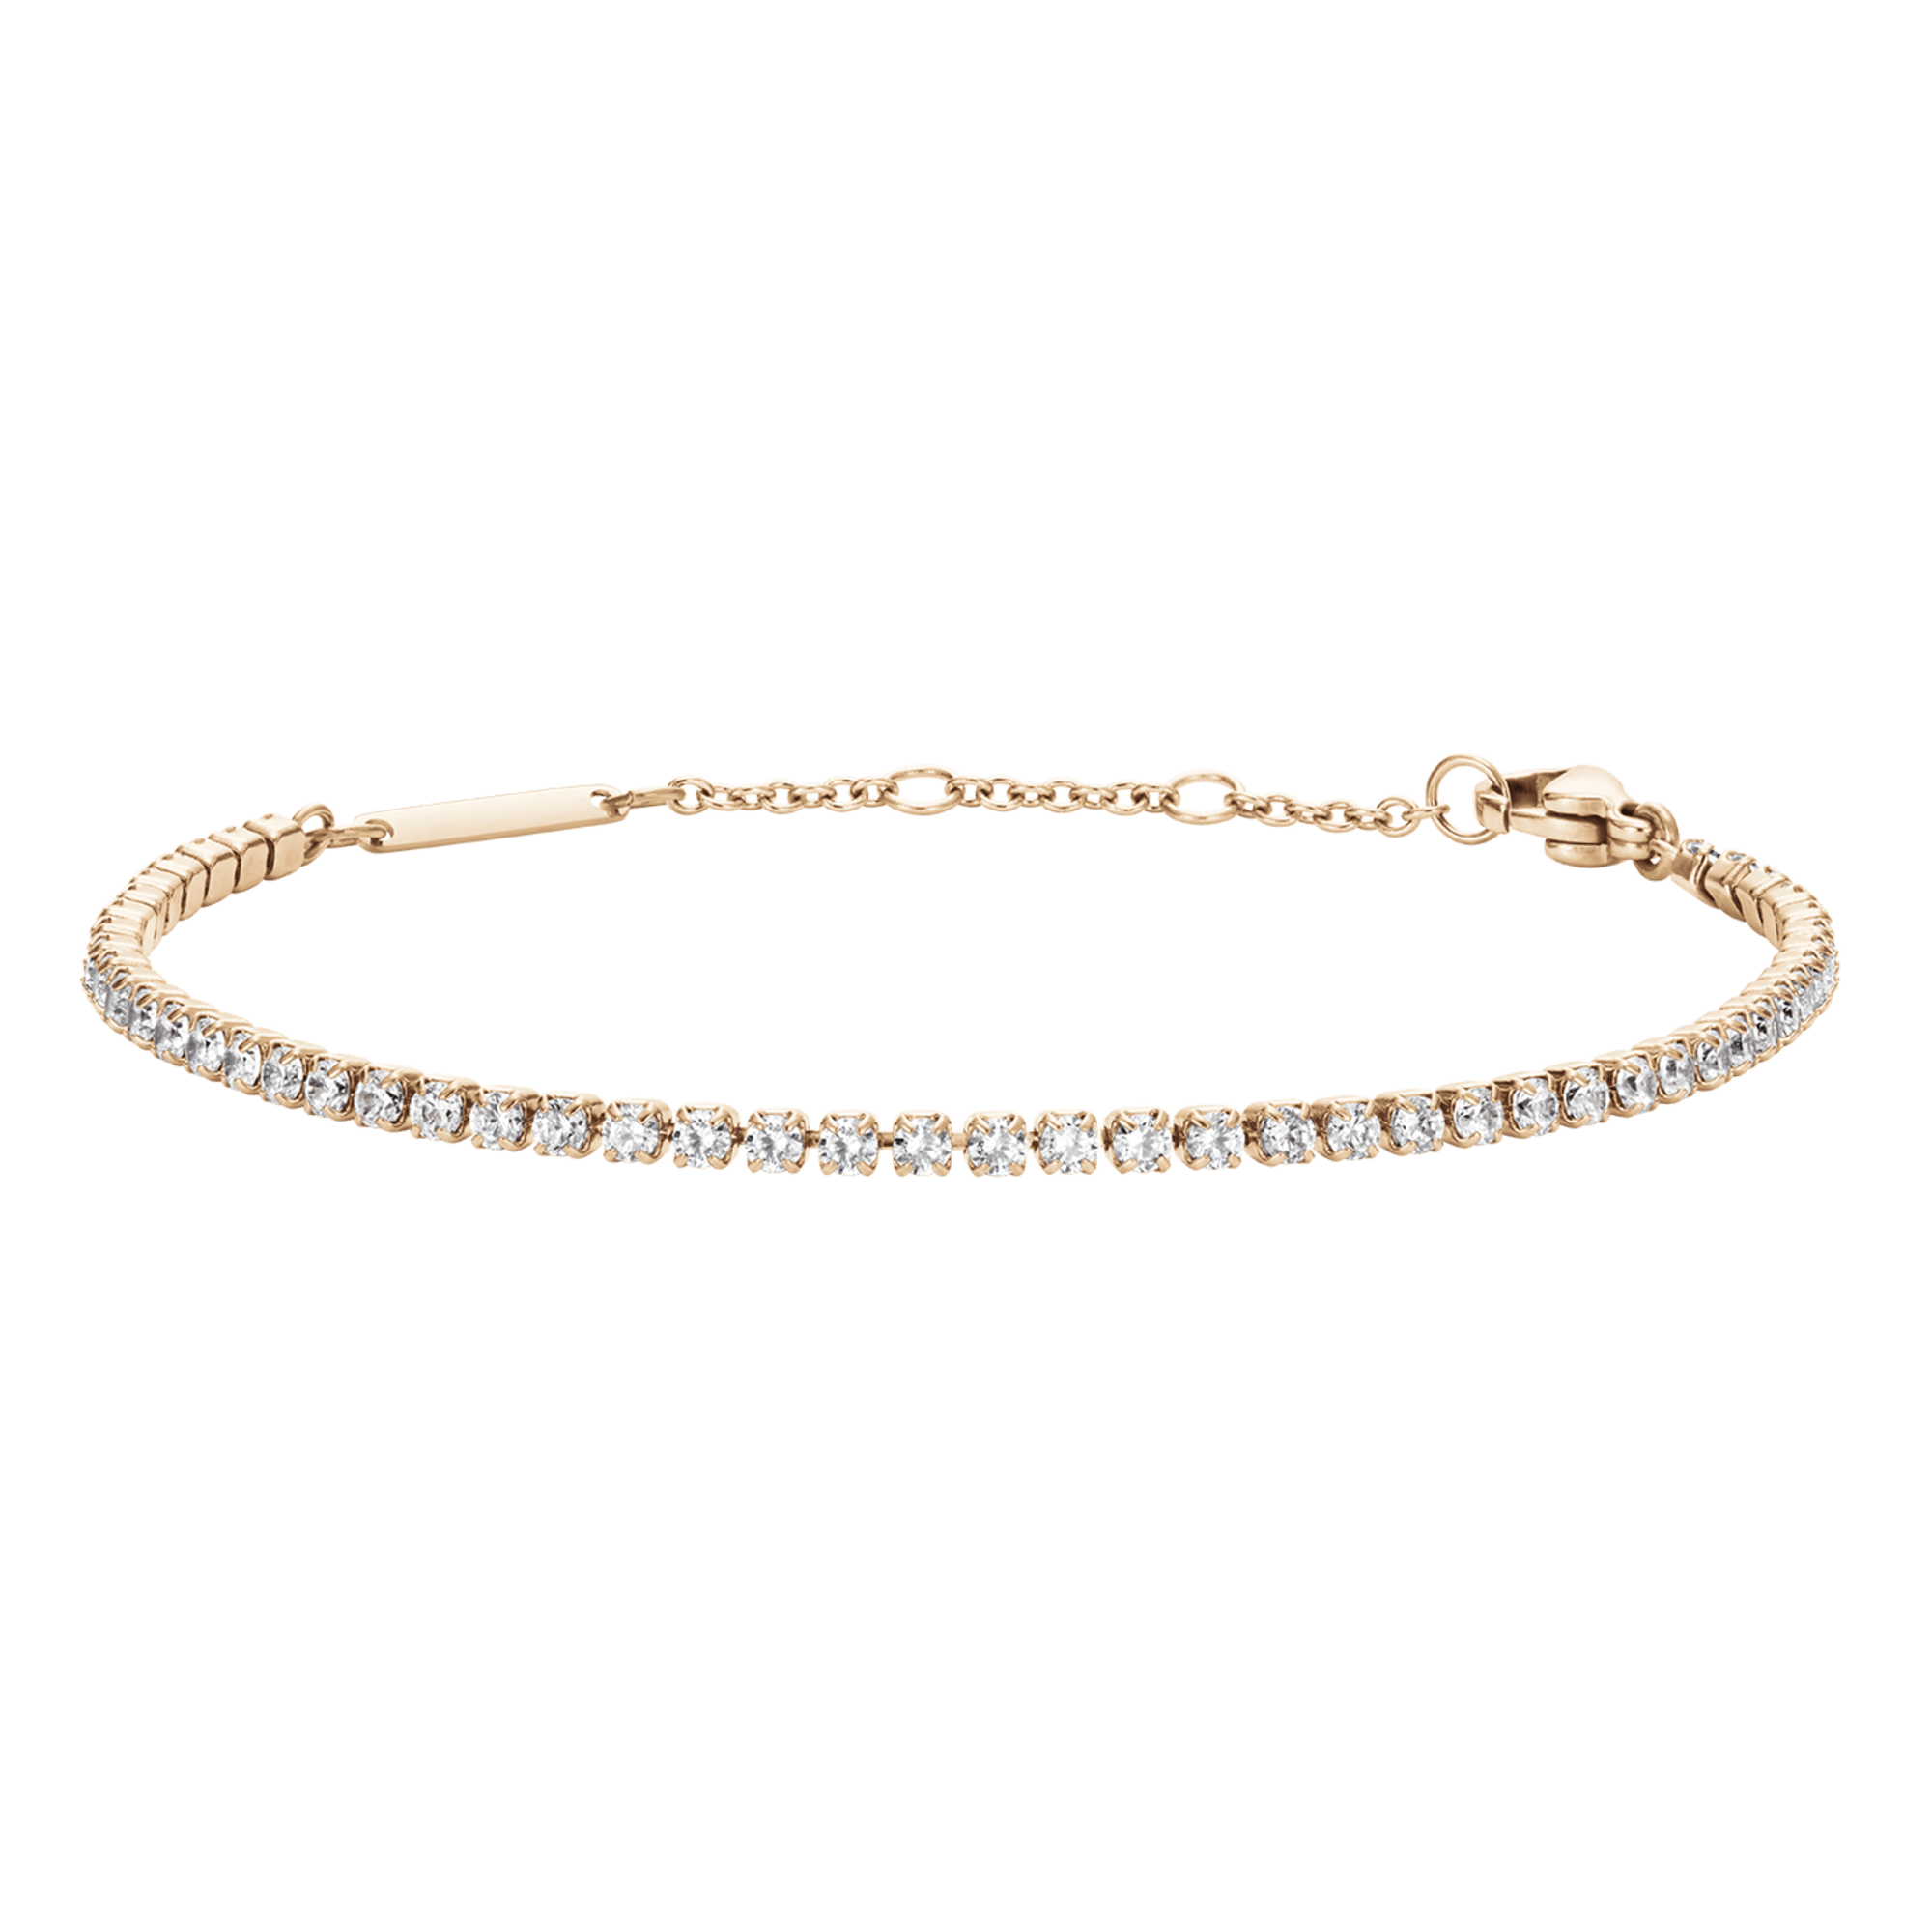 3 Carat Diamond Tennis Bracelet